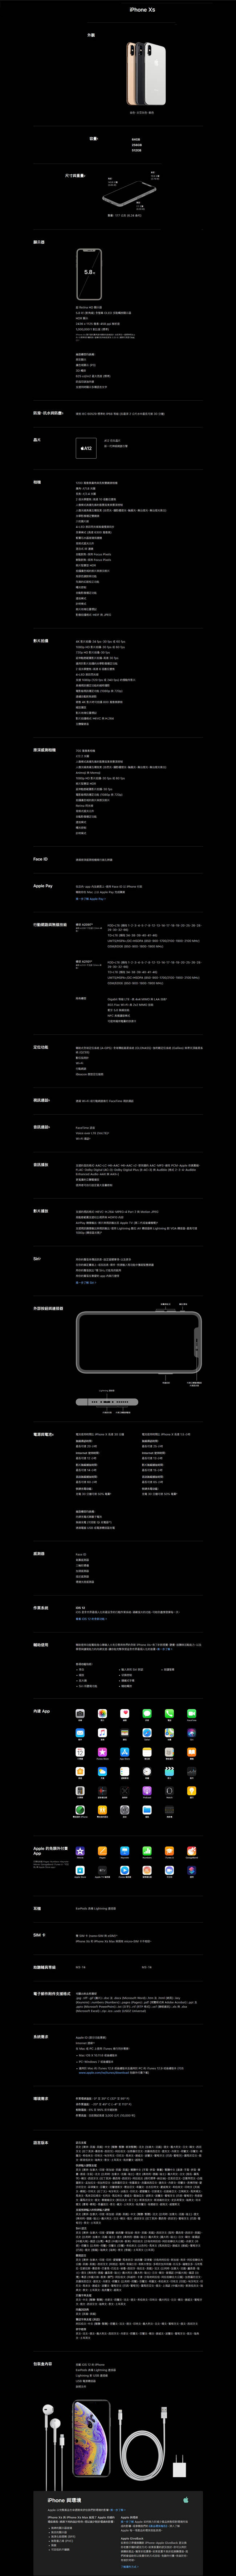 APPLE iPhone XS Max64GB智慧型手機